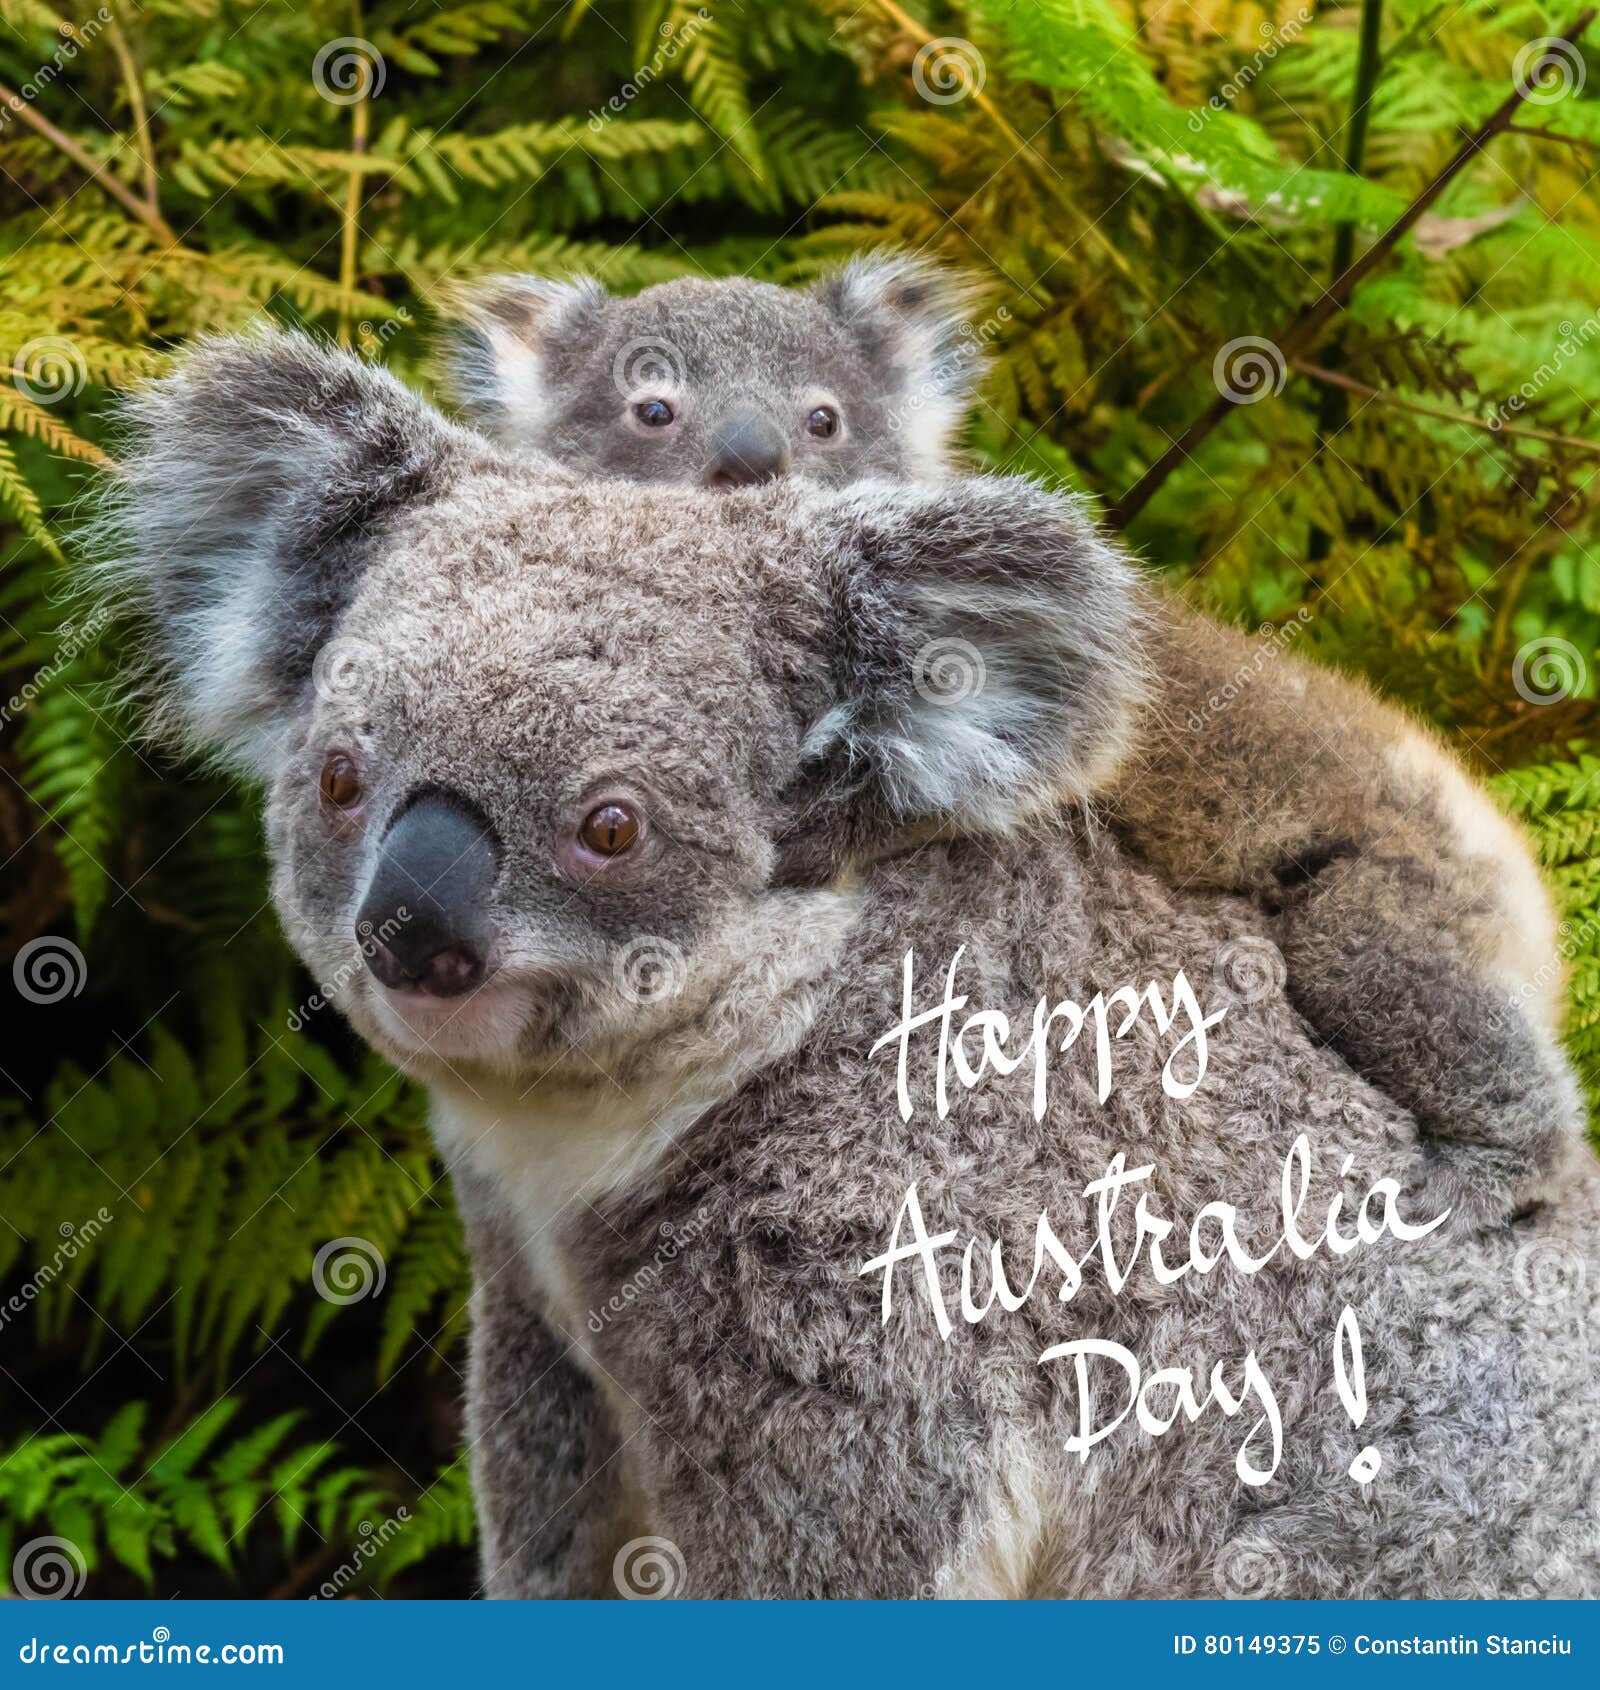 Australian Koala Bear Native Animal with Baby and Happy Australia Day  Greeting Stock Image - Image of native, nature: 80149375